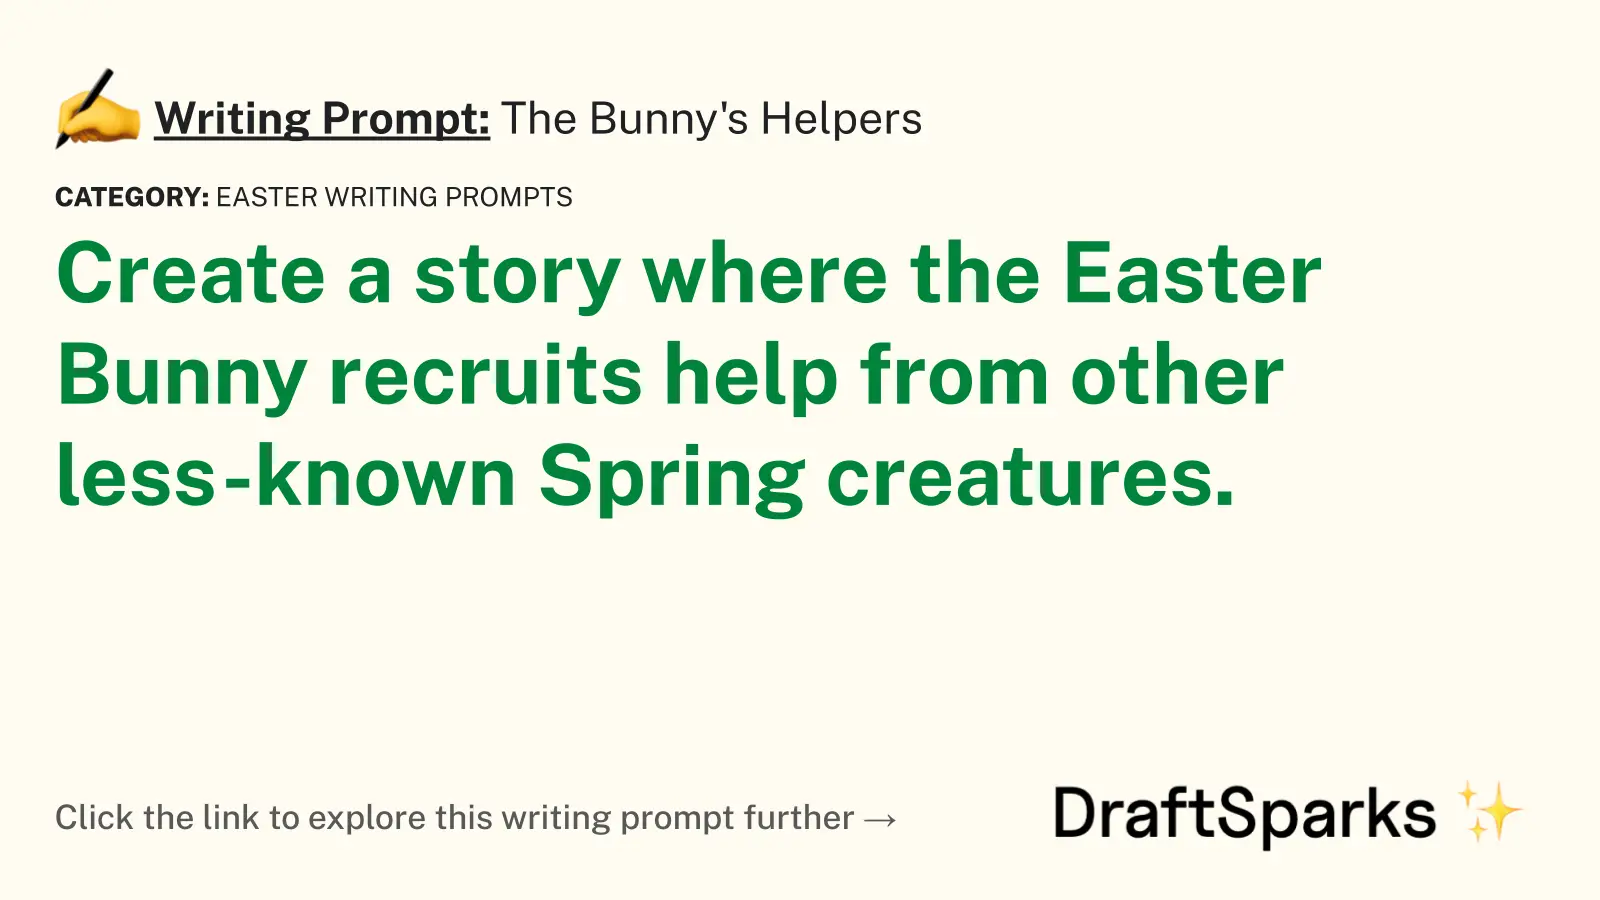 The Bunny’s Helpers